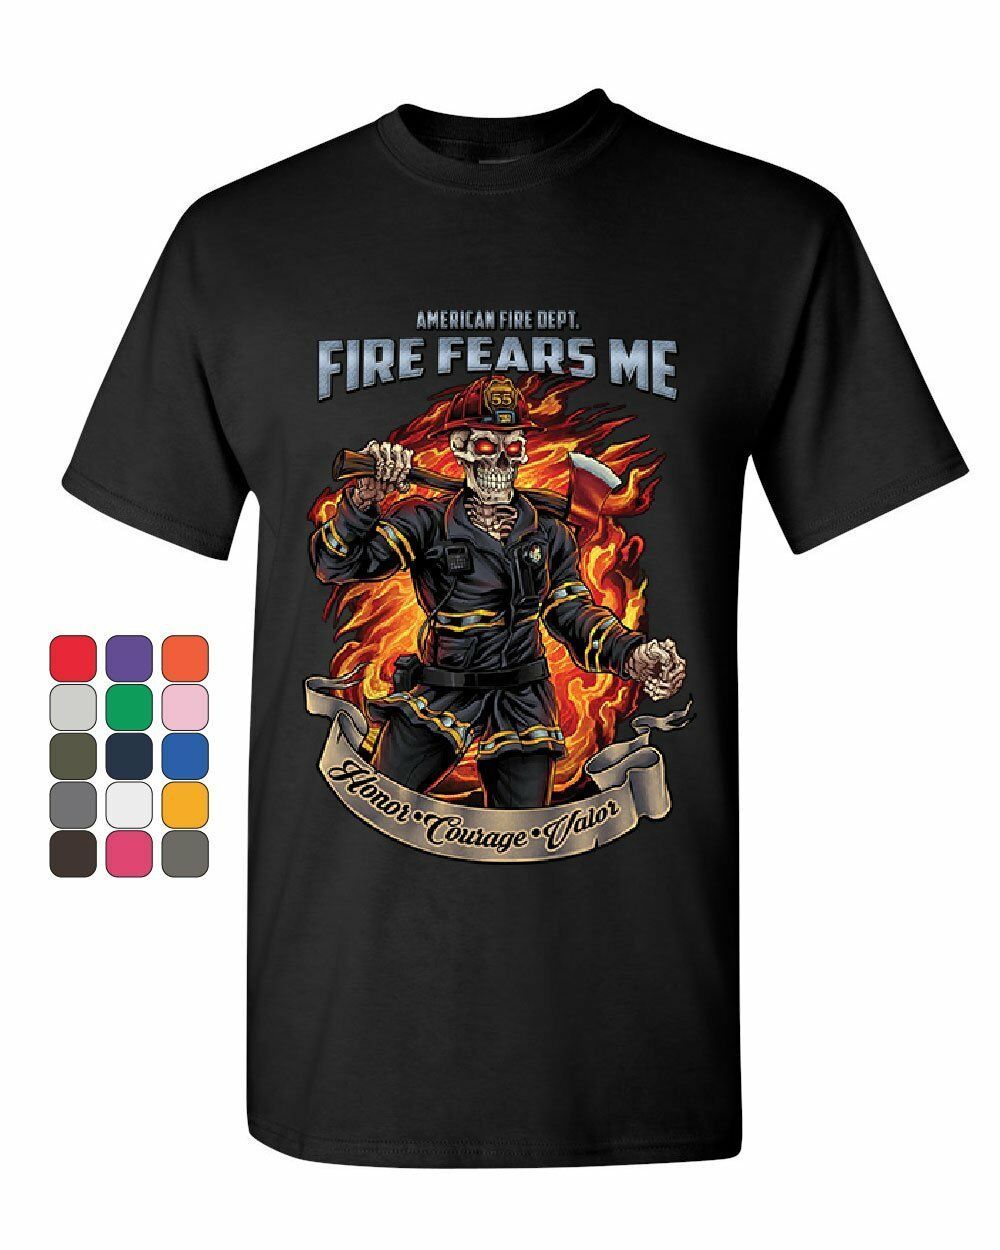 Fire Fears Me T-Shirt Firefighter Fire Dept. Honor Courage Valor Mens Tee Shirt